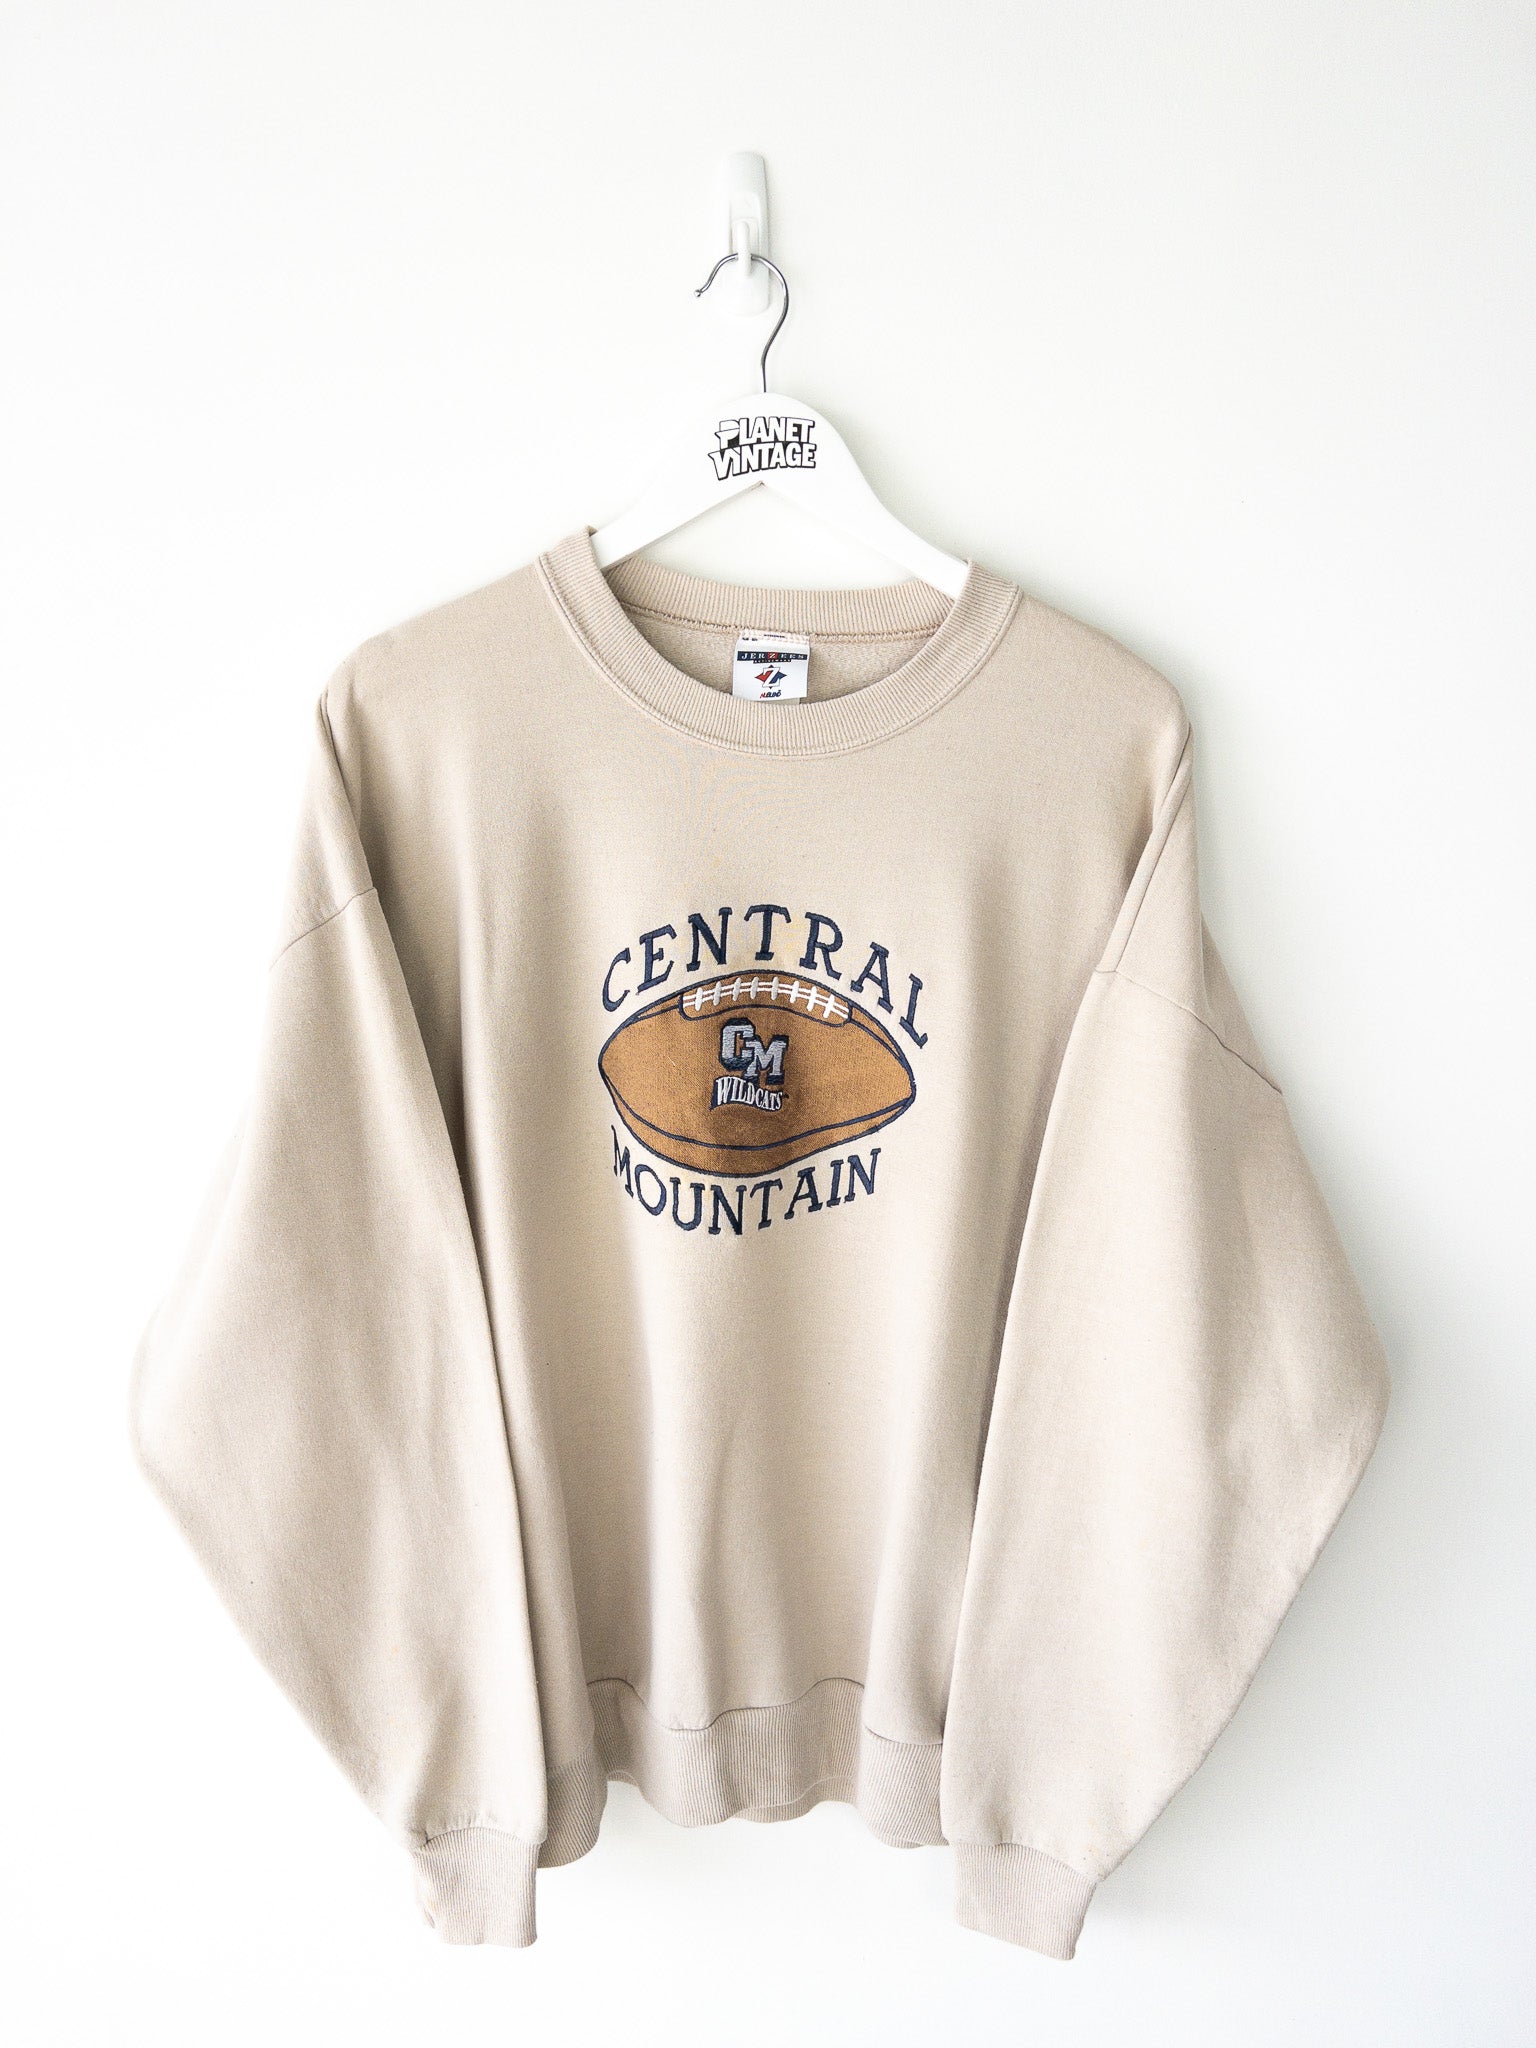 Vintage Central Mountain Wildcats Sweatshirt (XL)